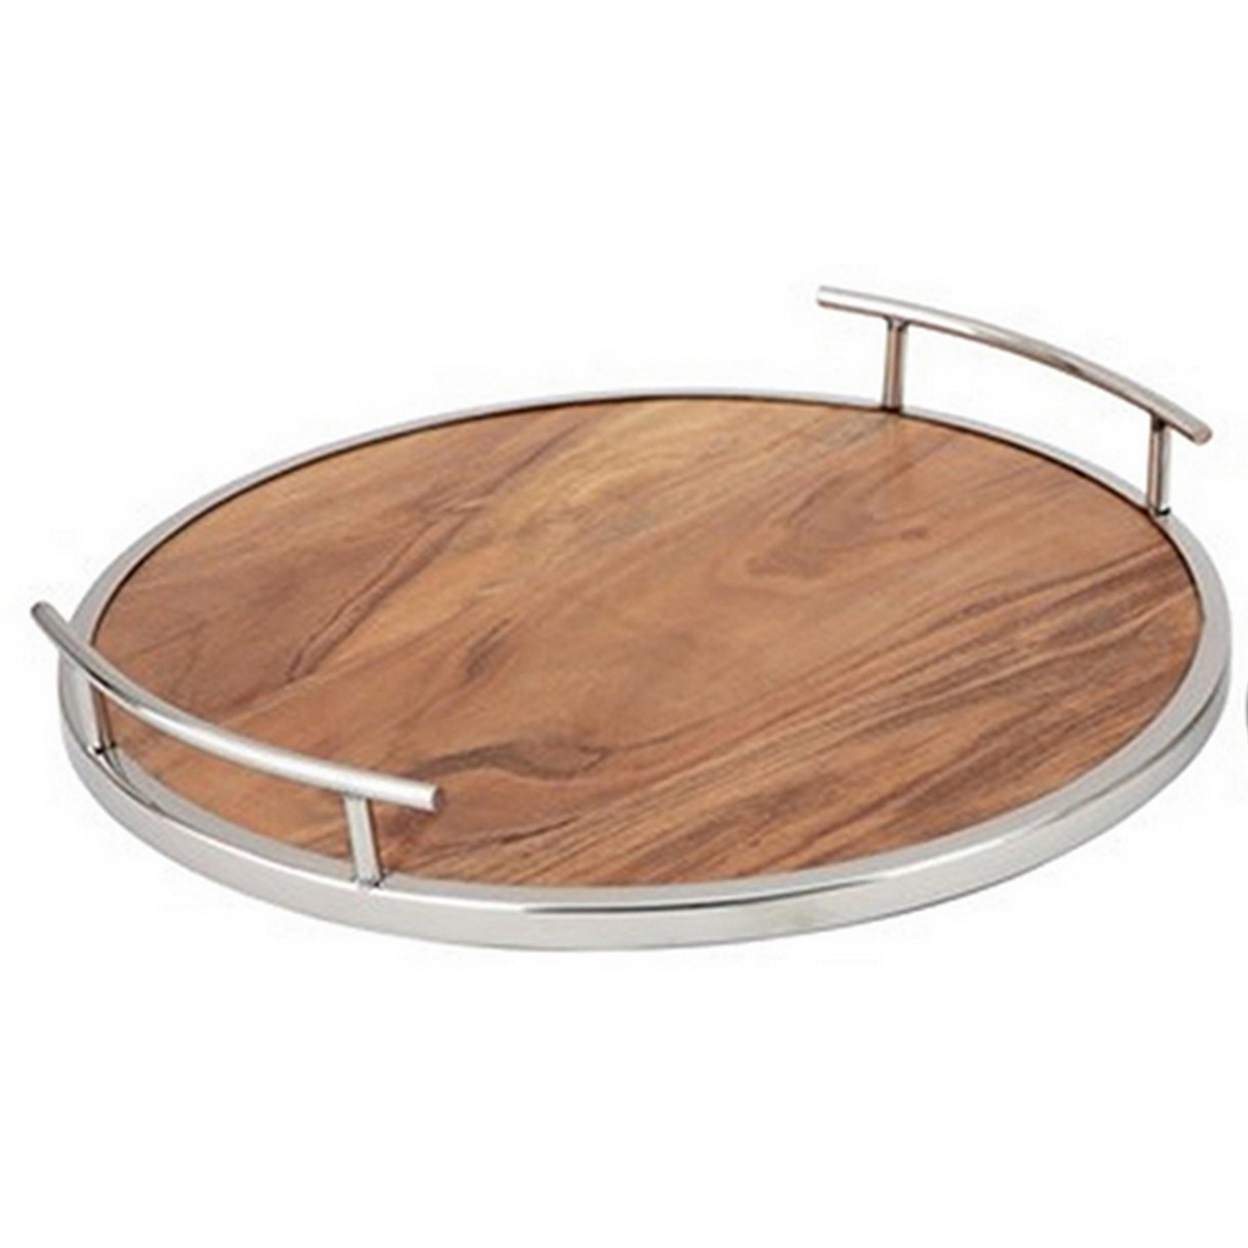 Set Of 2 Round Decorative Trays, Stainless Steel, Mango Wood Surfaces - Saltoro Sherpi